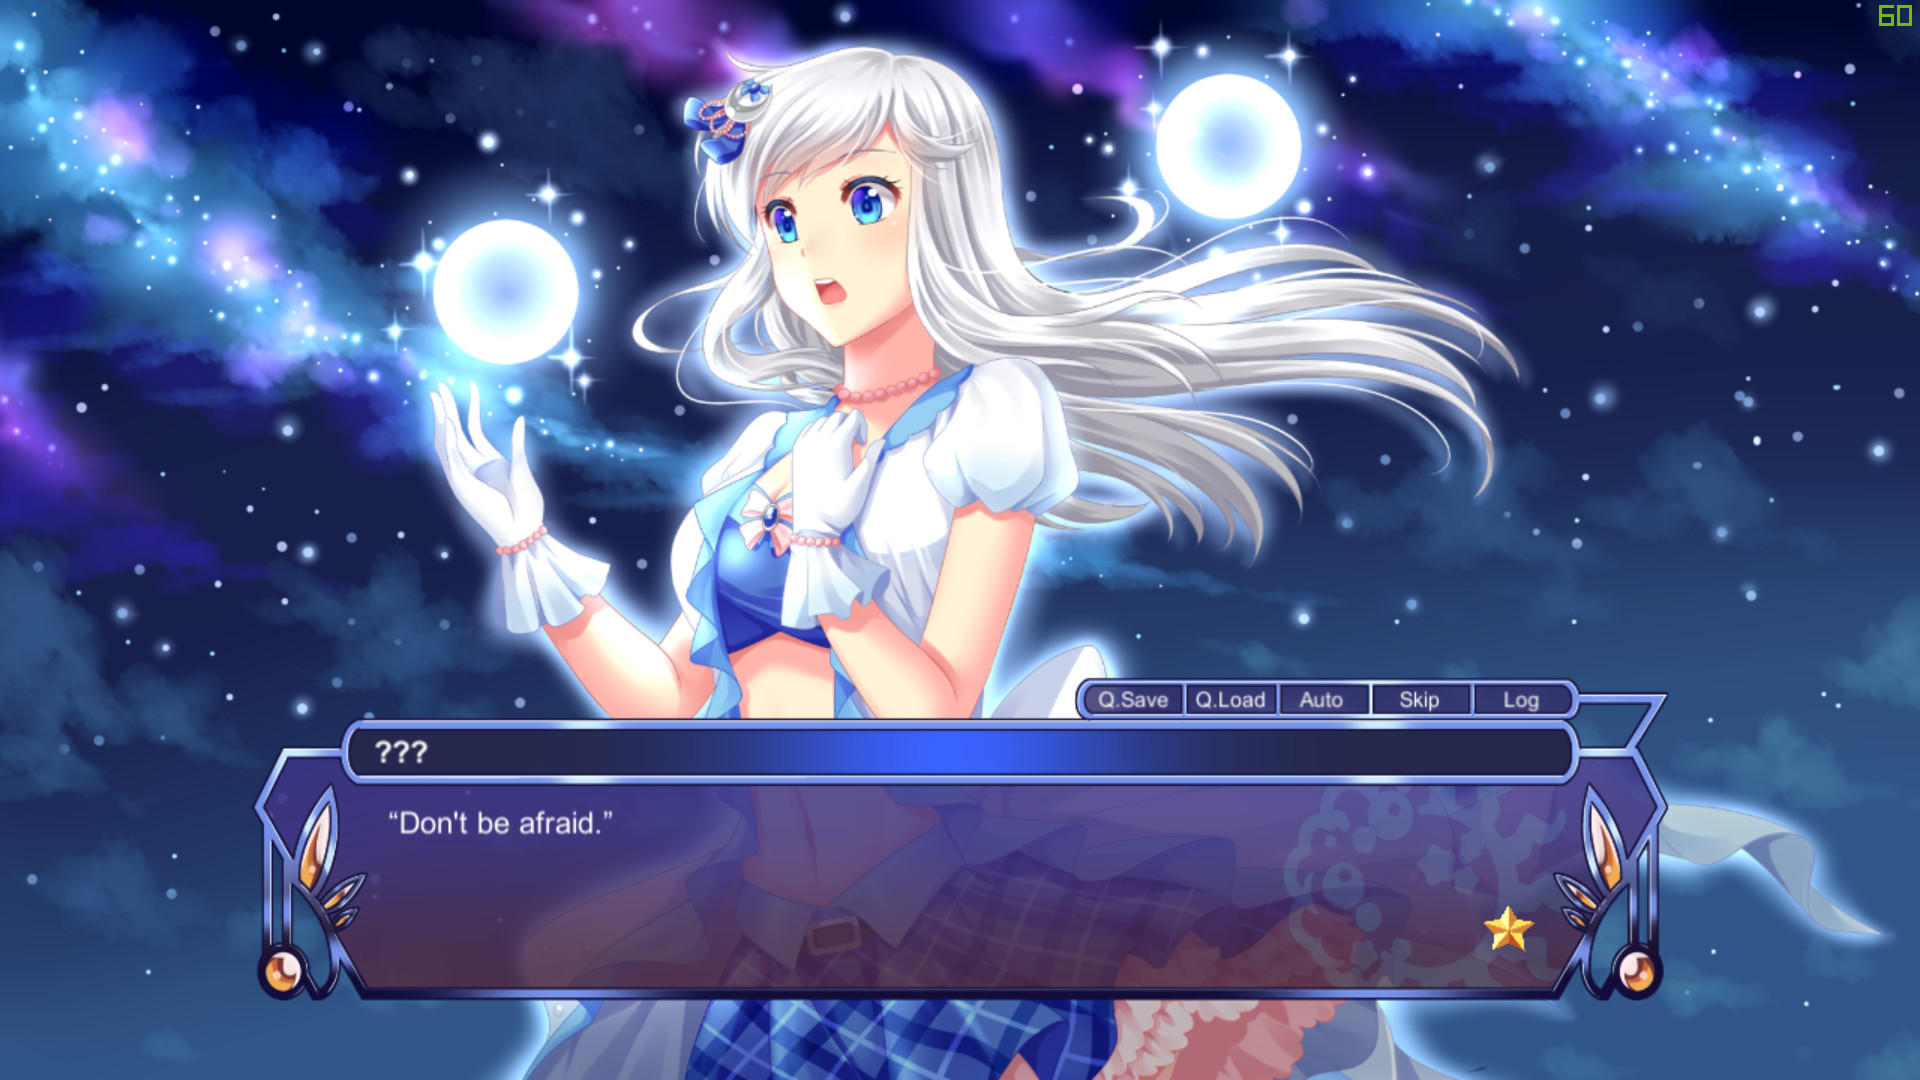 Awakening of Celestial Demo Featured Screenshot #1